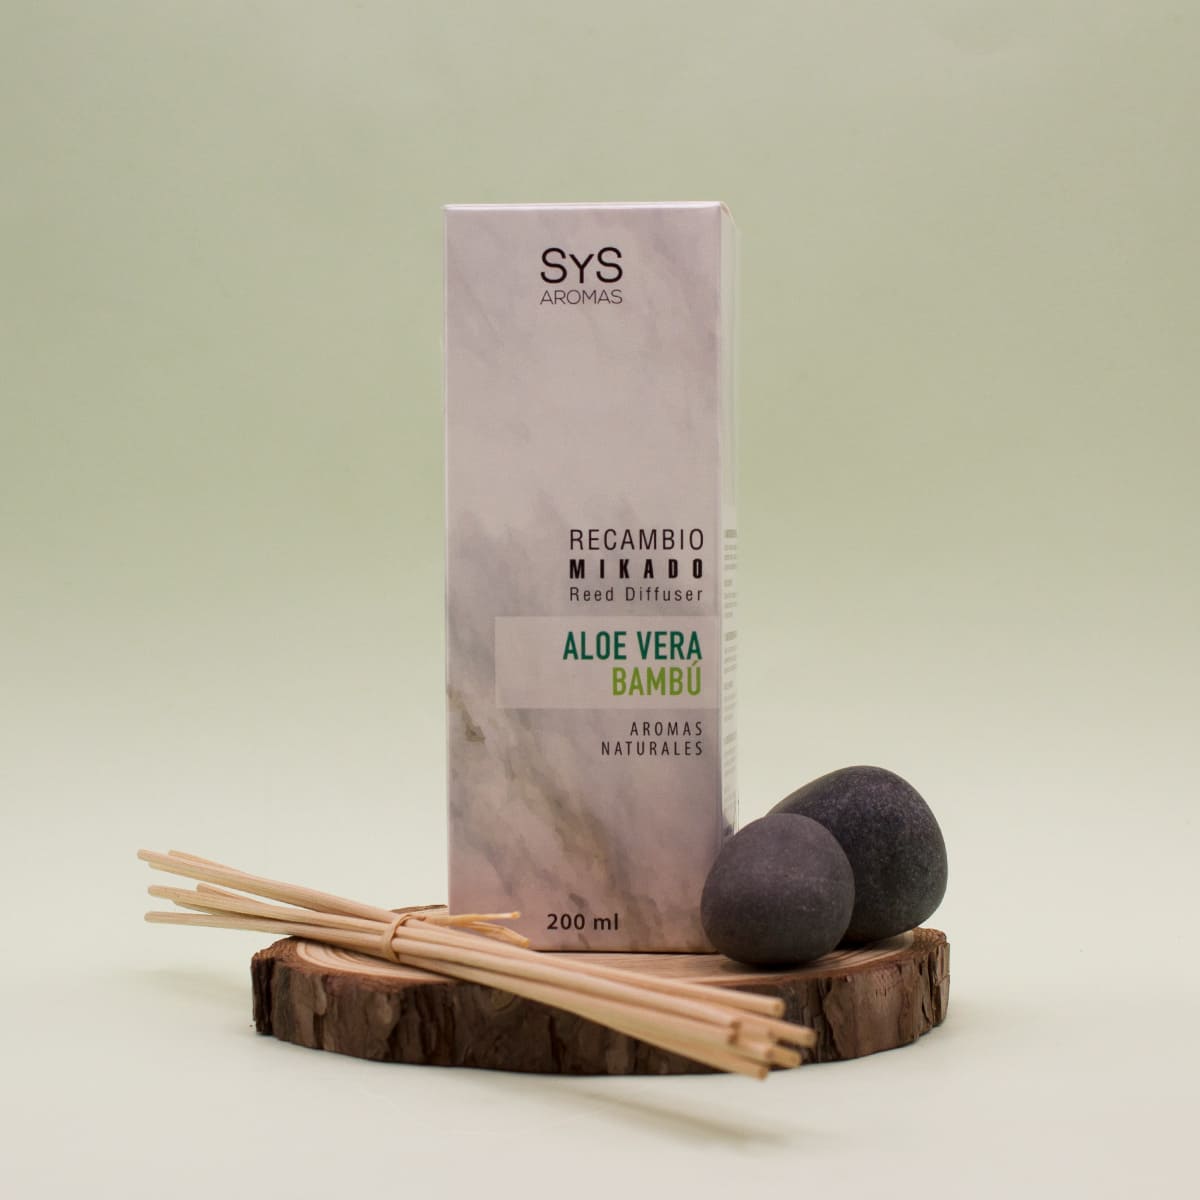 Comprar Recambio Mikado Aloe Vera Bambu 200ml + Palos Marmol Collection SYS Aromas